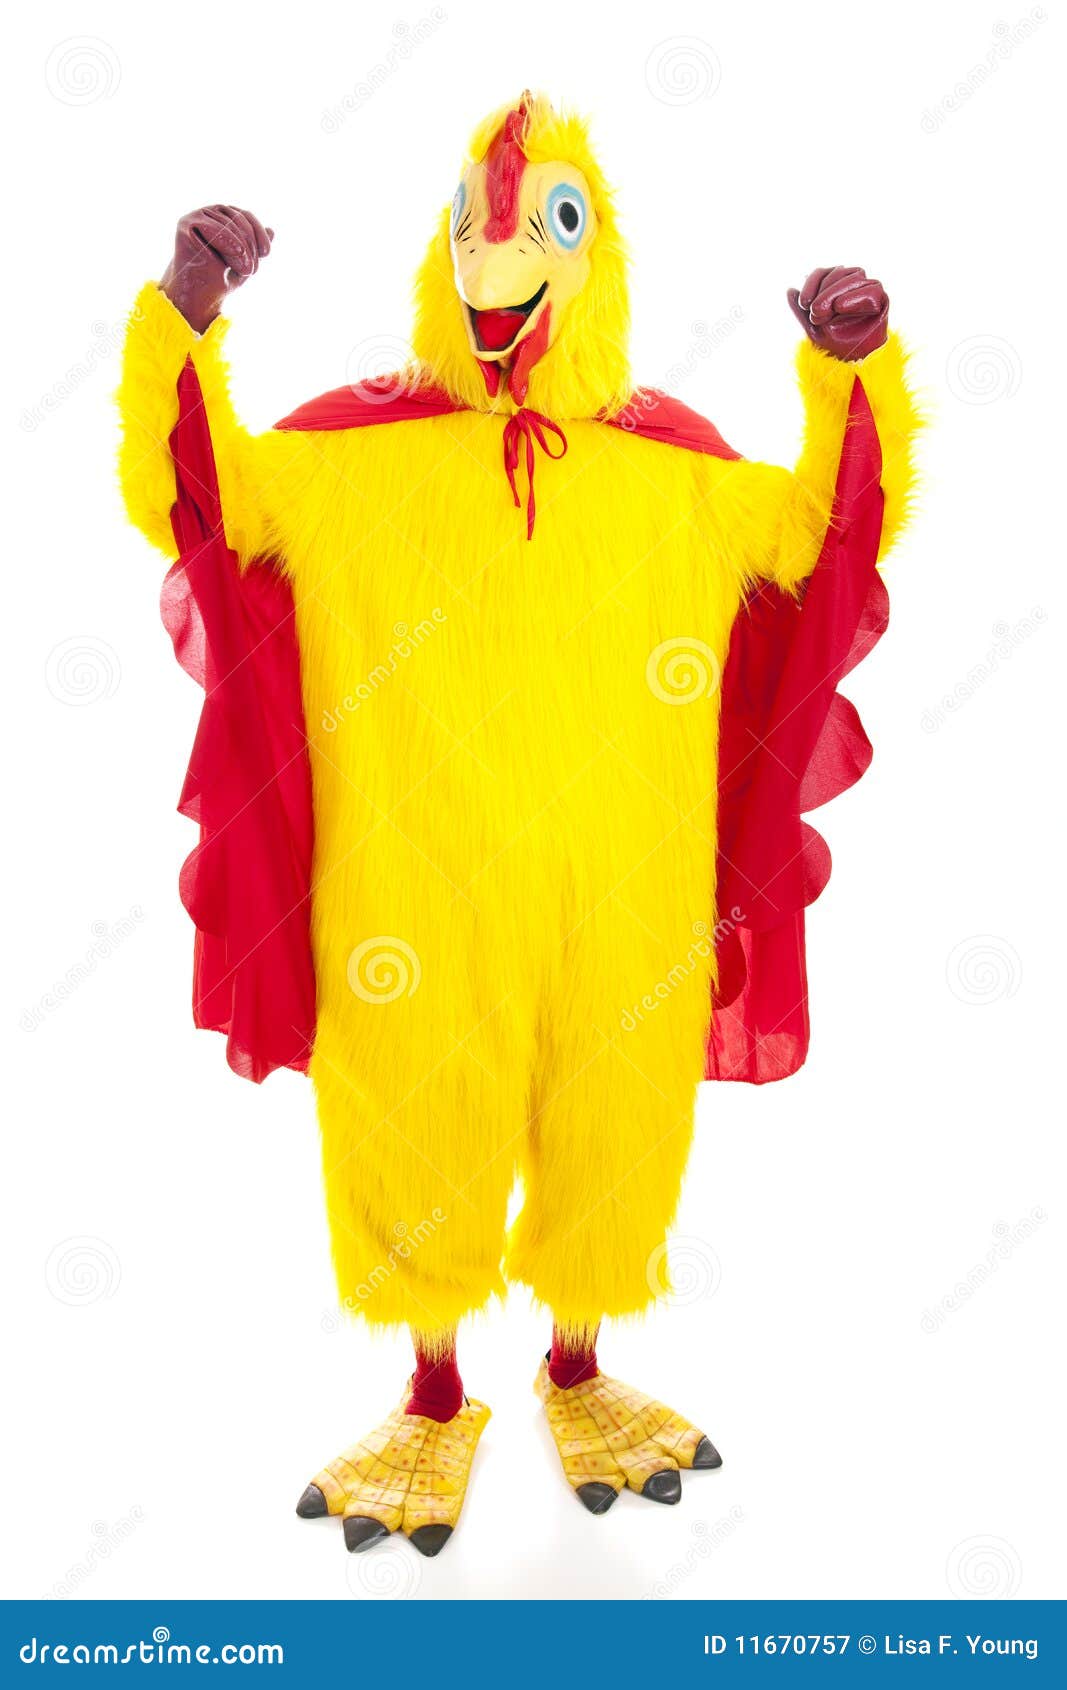 890+$ chicken suit | Instagram